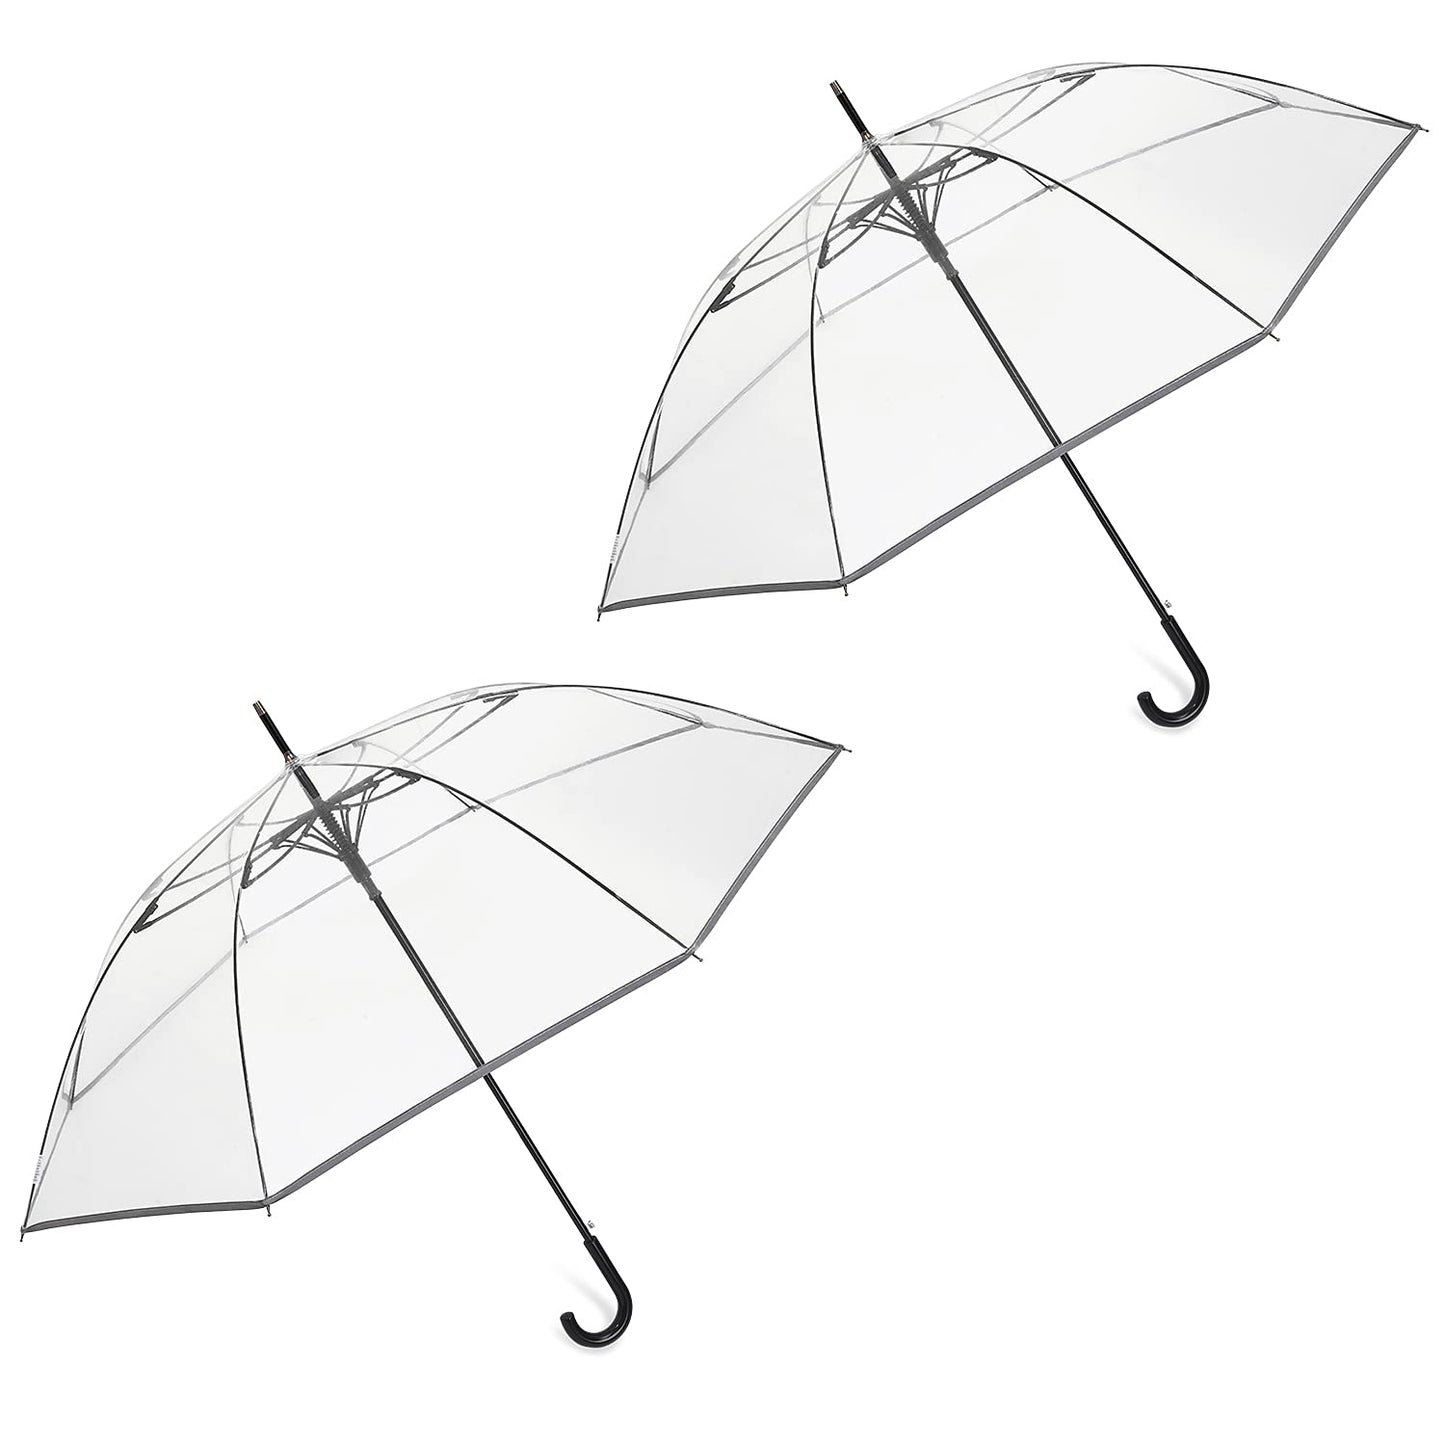 G4Free 62 Inch Clear Umbrella Large Oversize Auto Open Umbrella